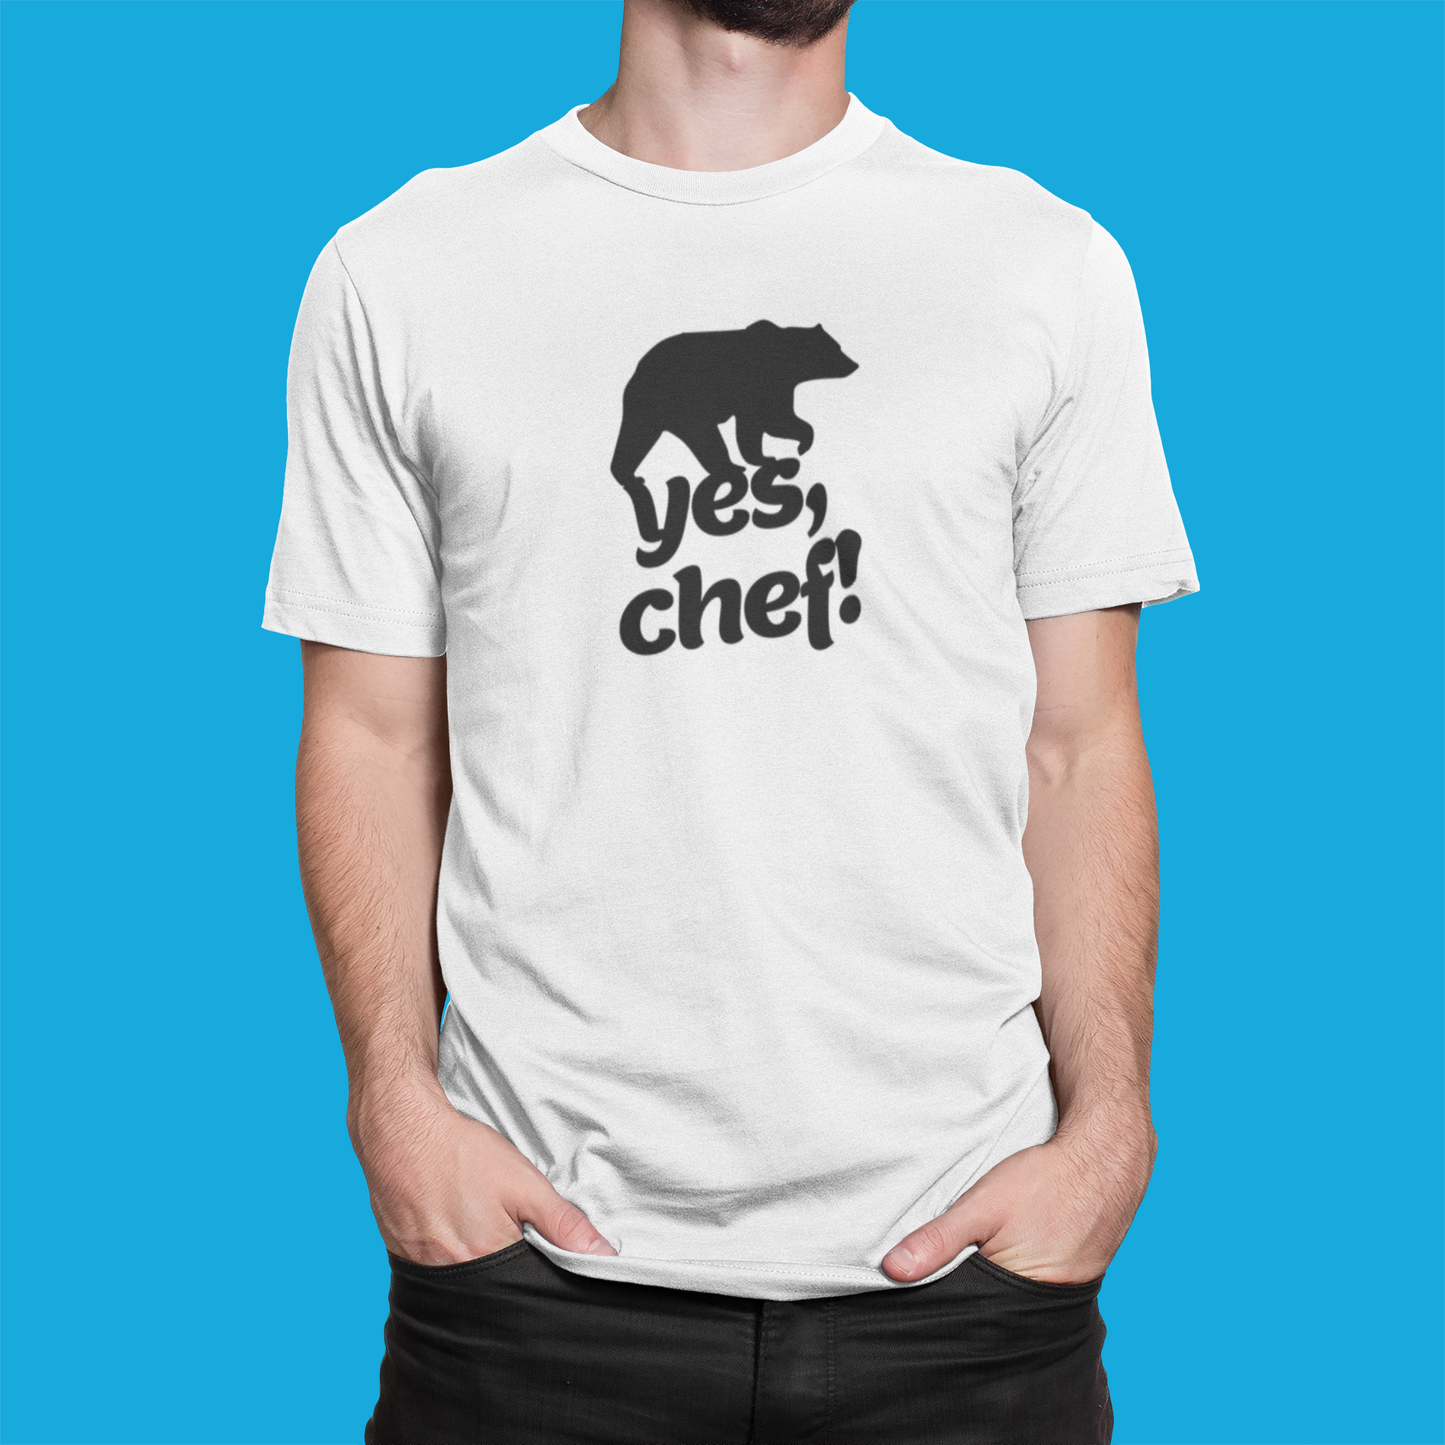 Camiseta "Yes, Chef!" - The Bear - Séries de TV